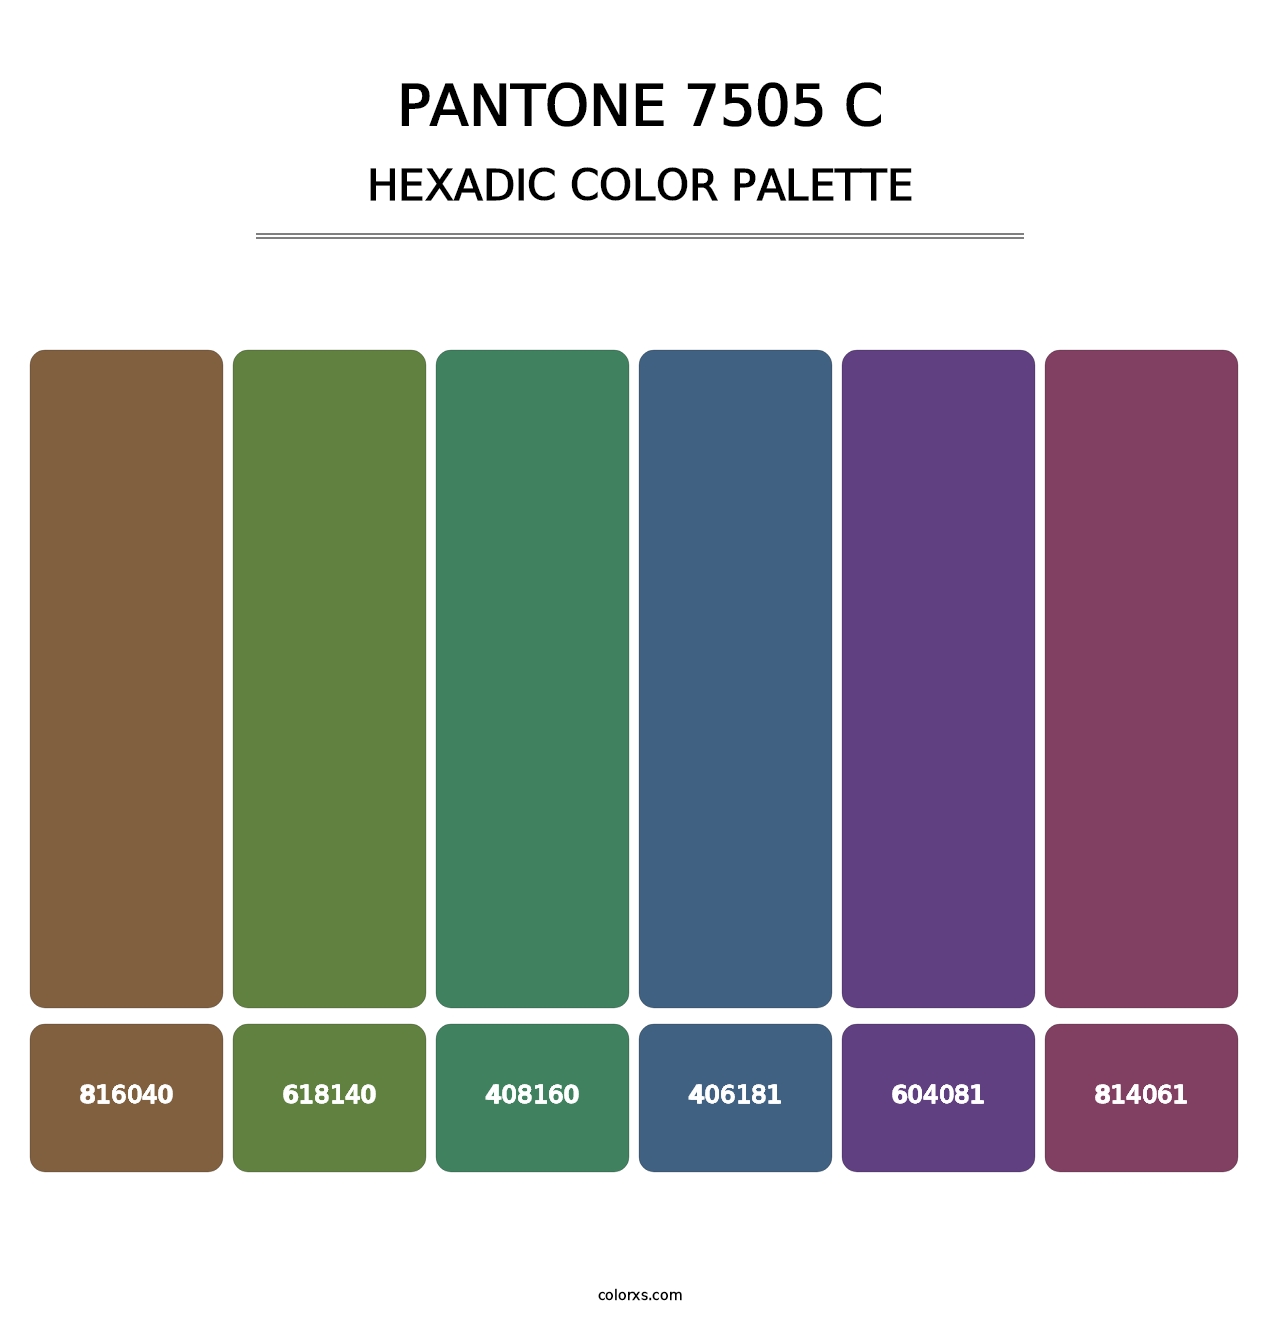 PANTONE 7505 C - Hexadic Color Palette